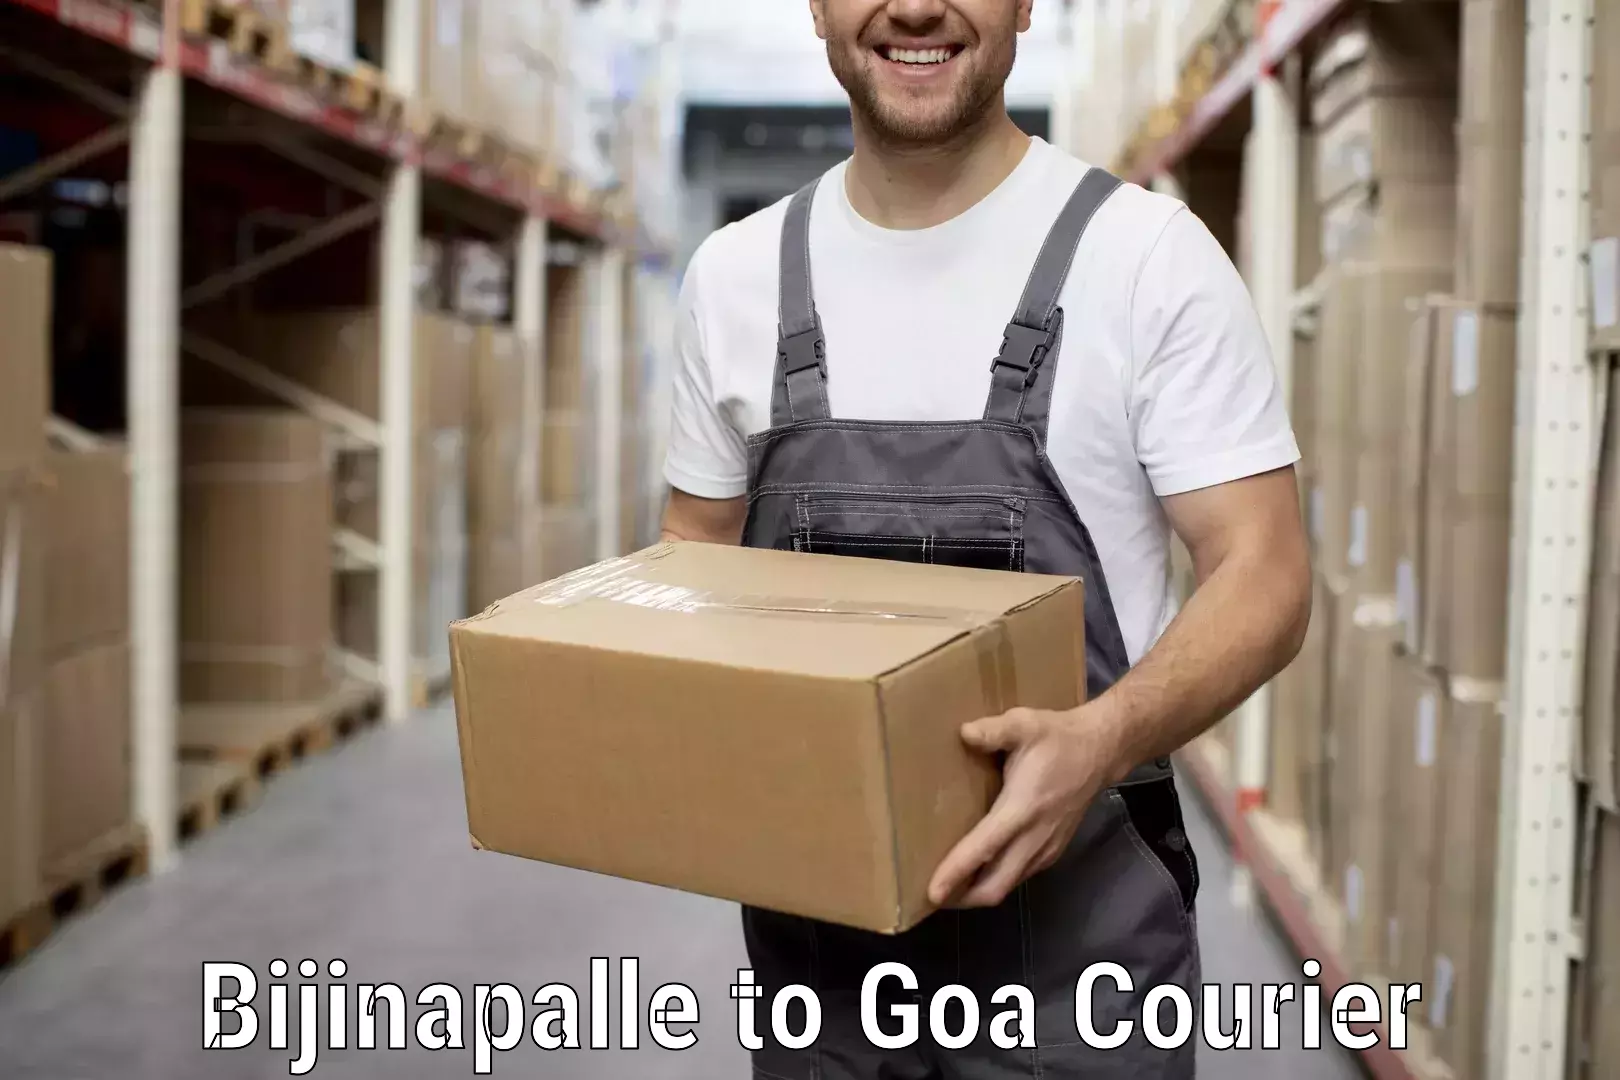 Furniture delivery service Bijinapalle to Goa